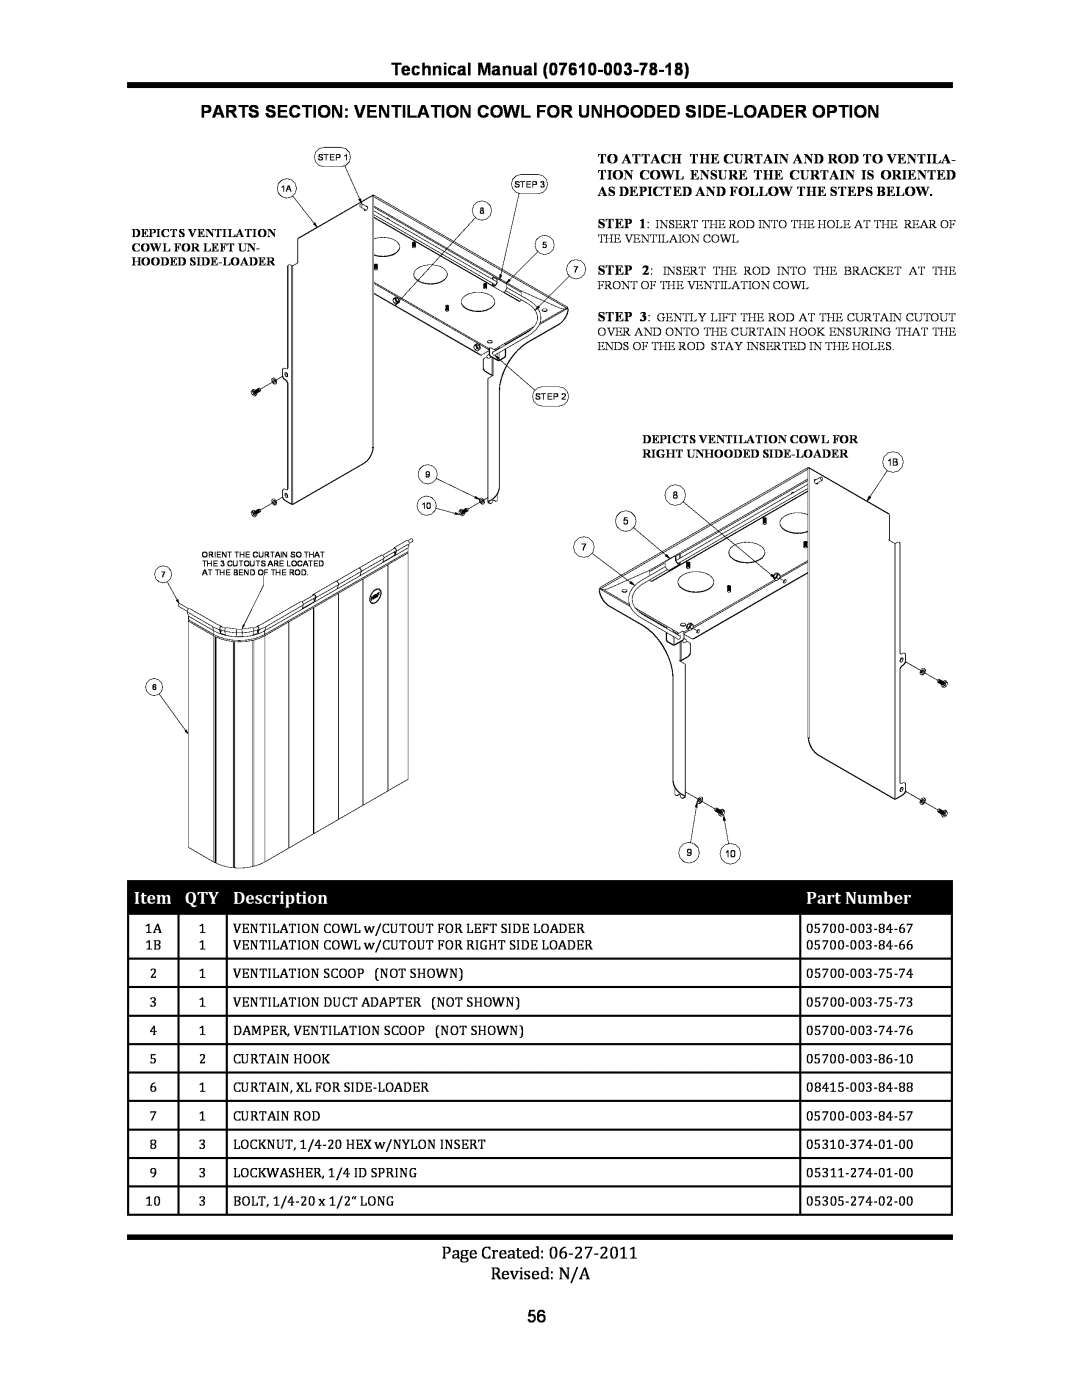 Jackson CREW 44S, CREW 66S Technical Manual, Parts Section Ventilation Cowl For Unhooded Side-Loader Option, Description 